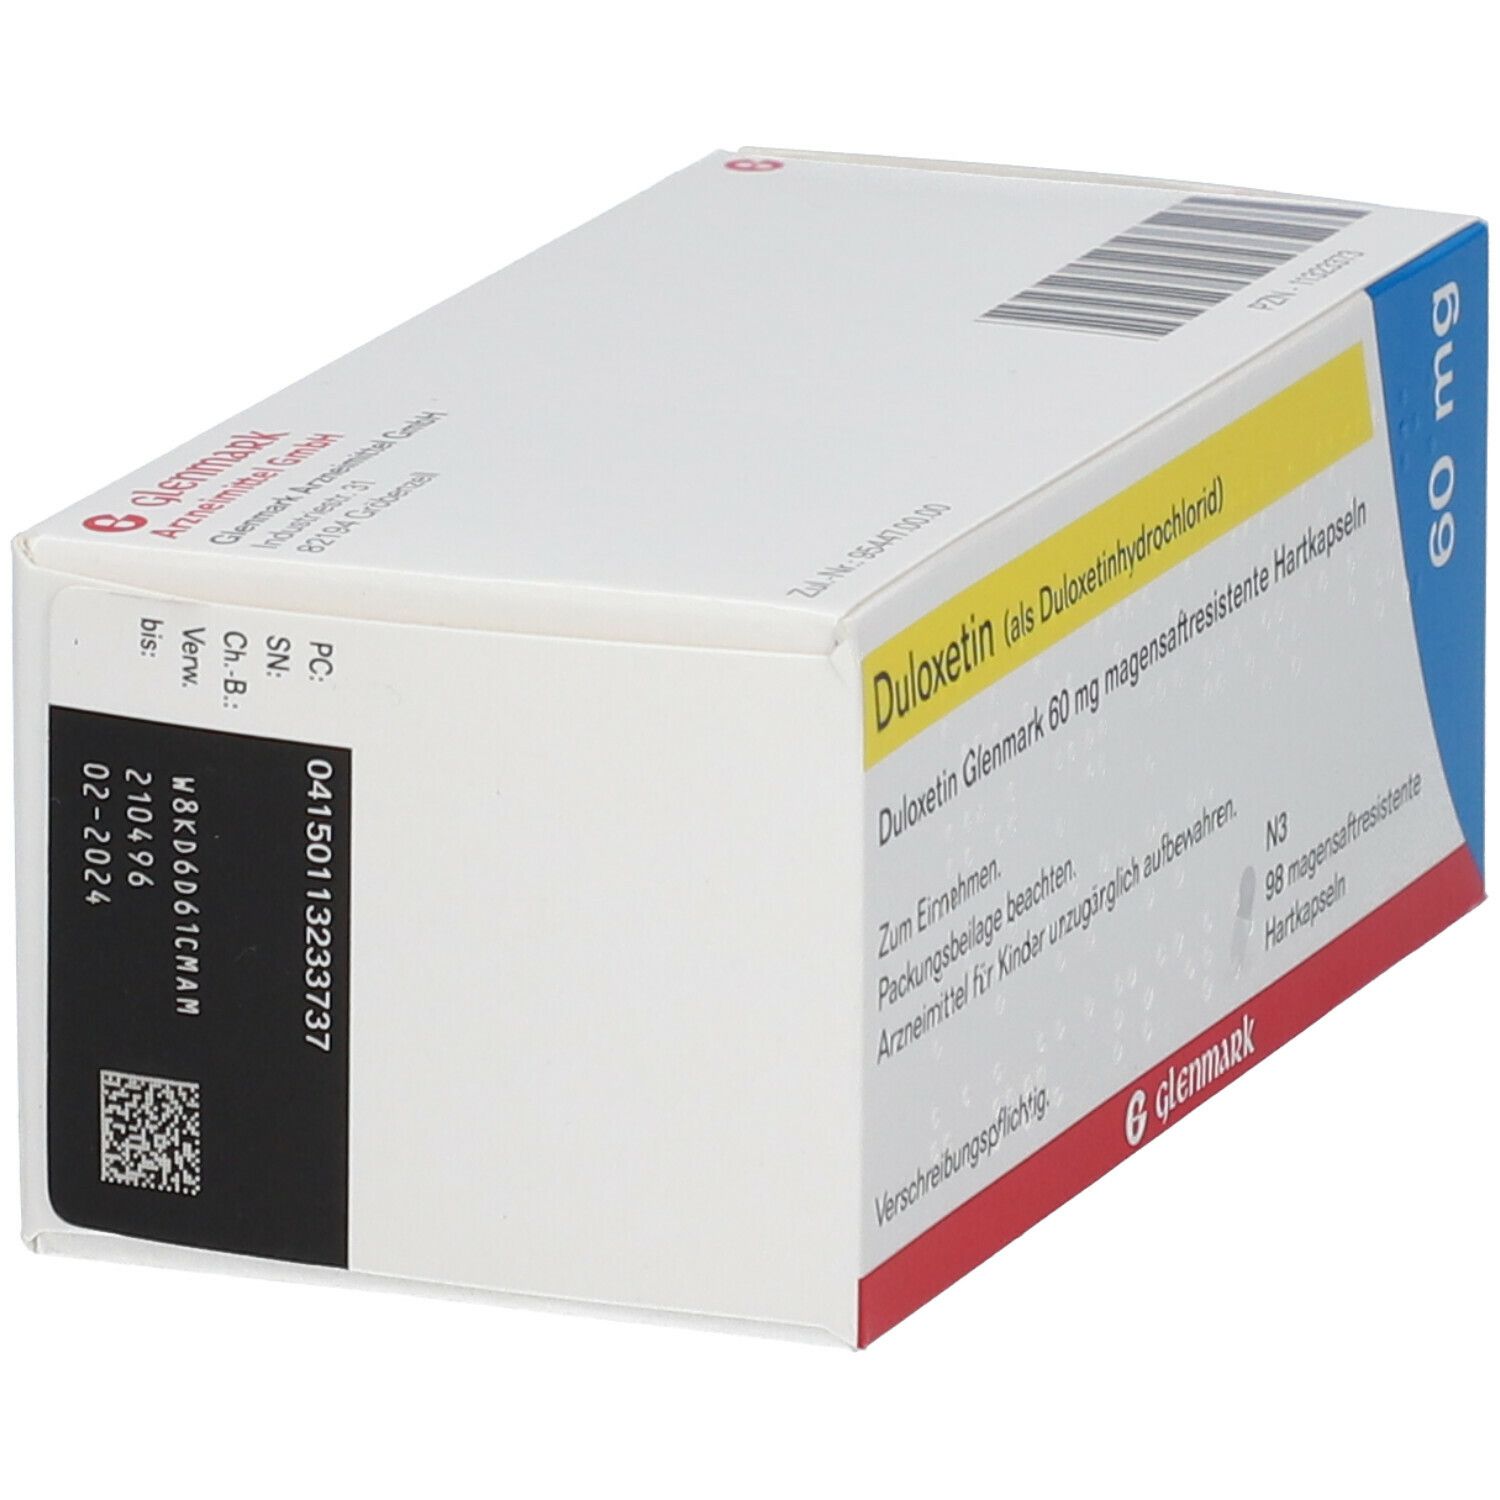 Duloxetin Glenmark 60 mg